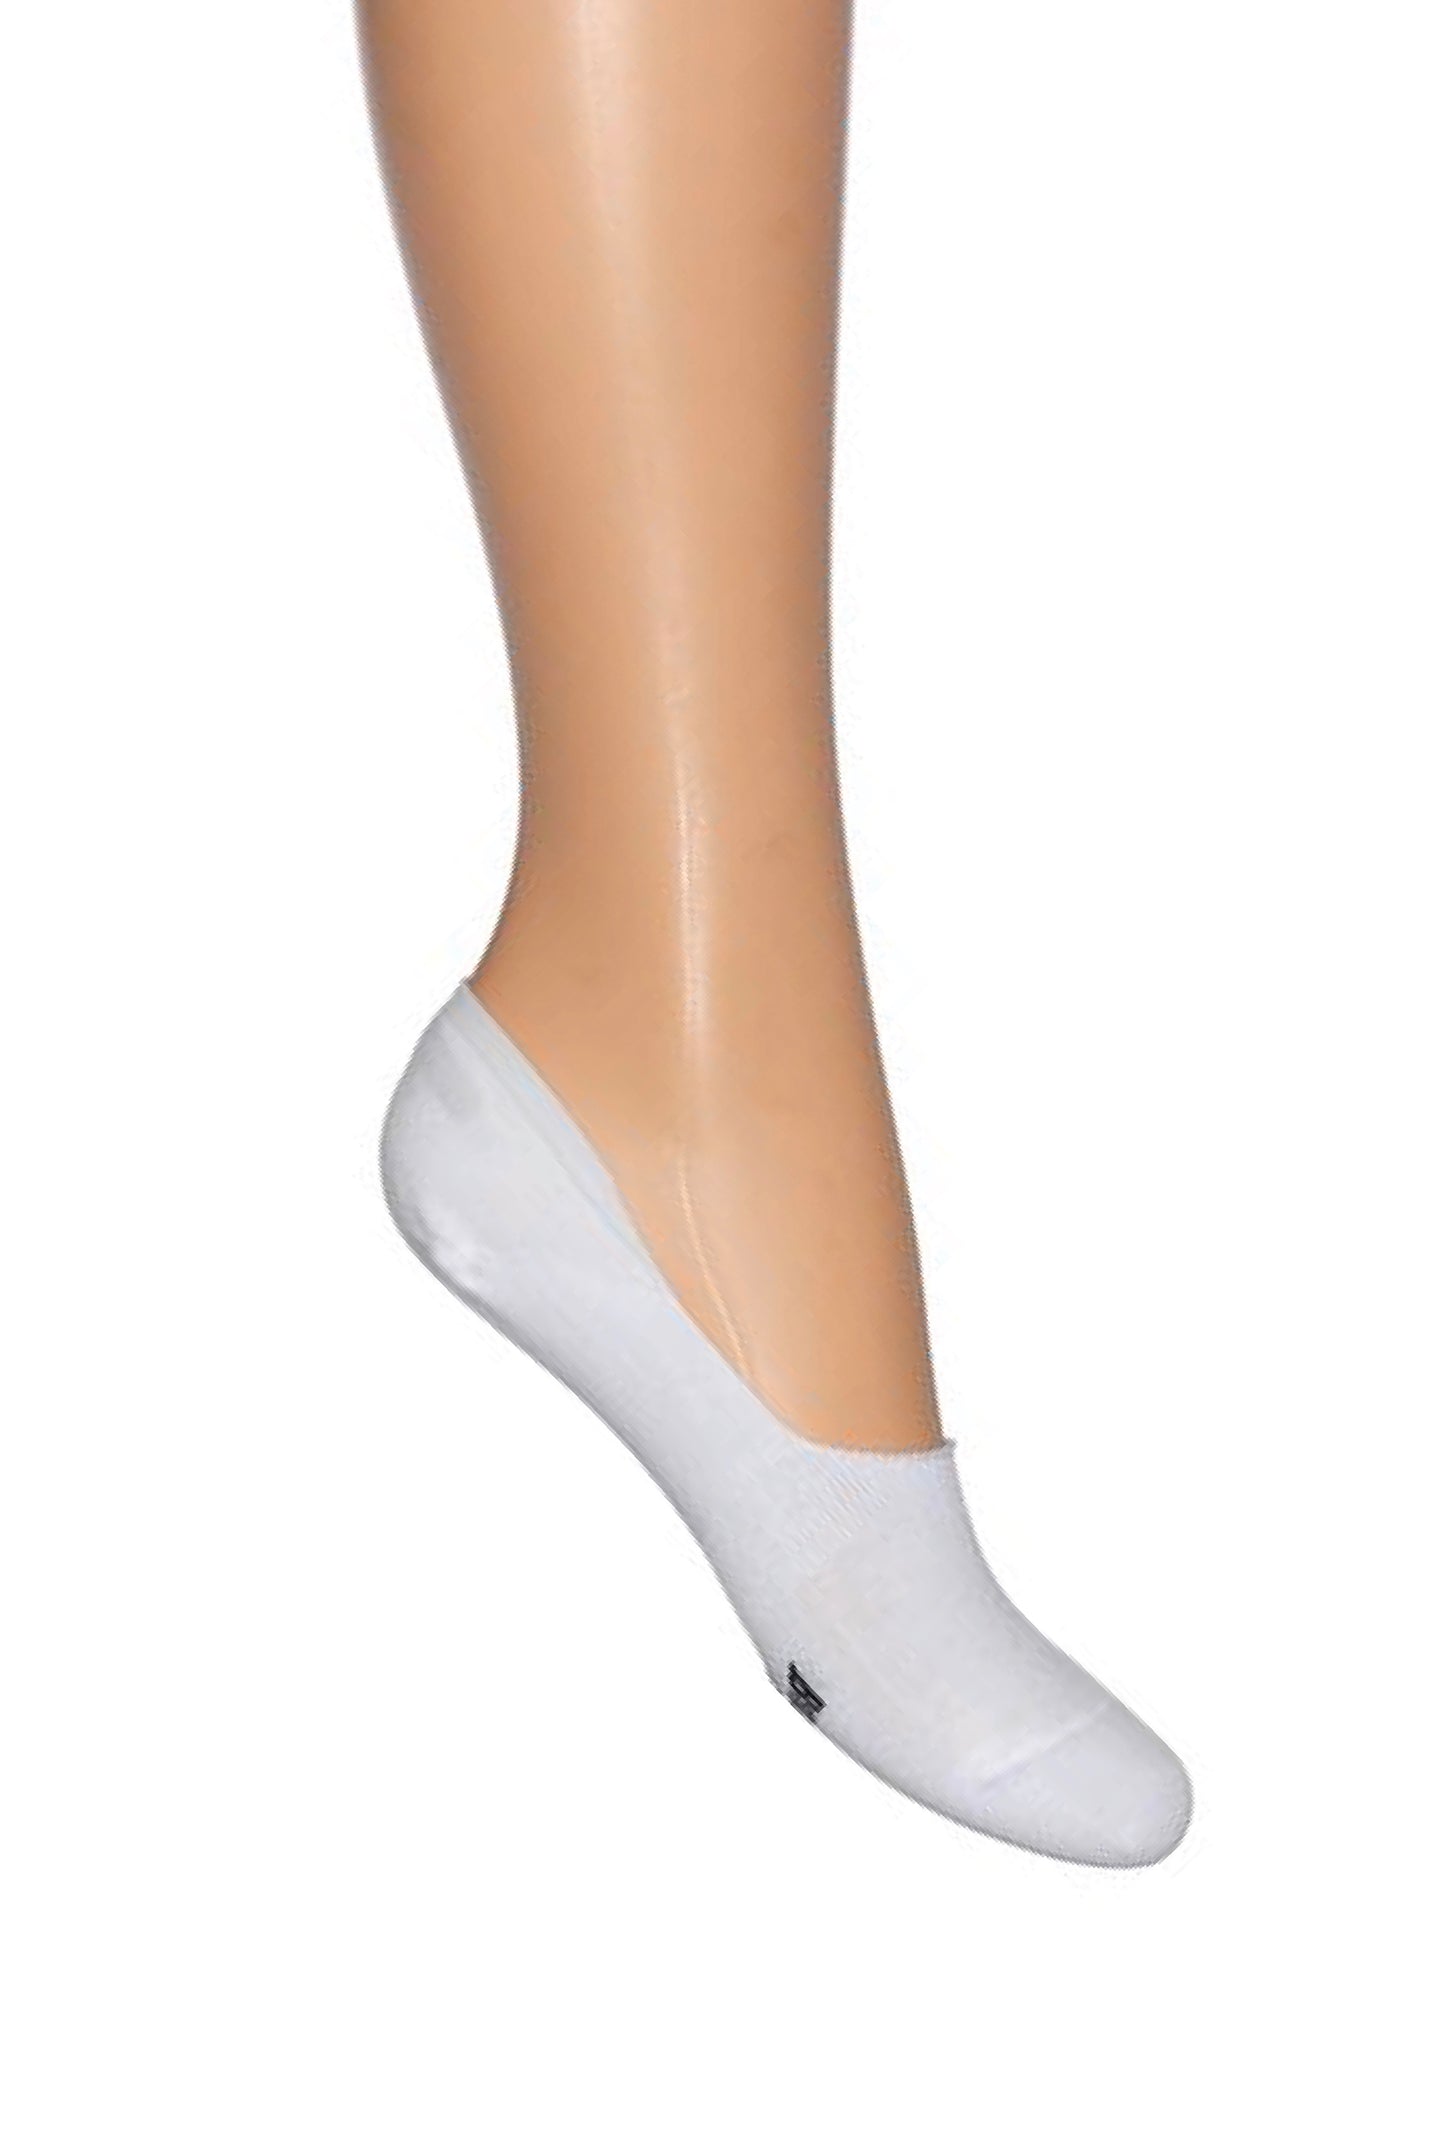 Bonnie Doon BN46.10.10 Sneaker Footie - white cotton sports shoe liner no show socks